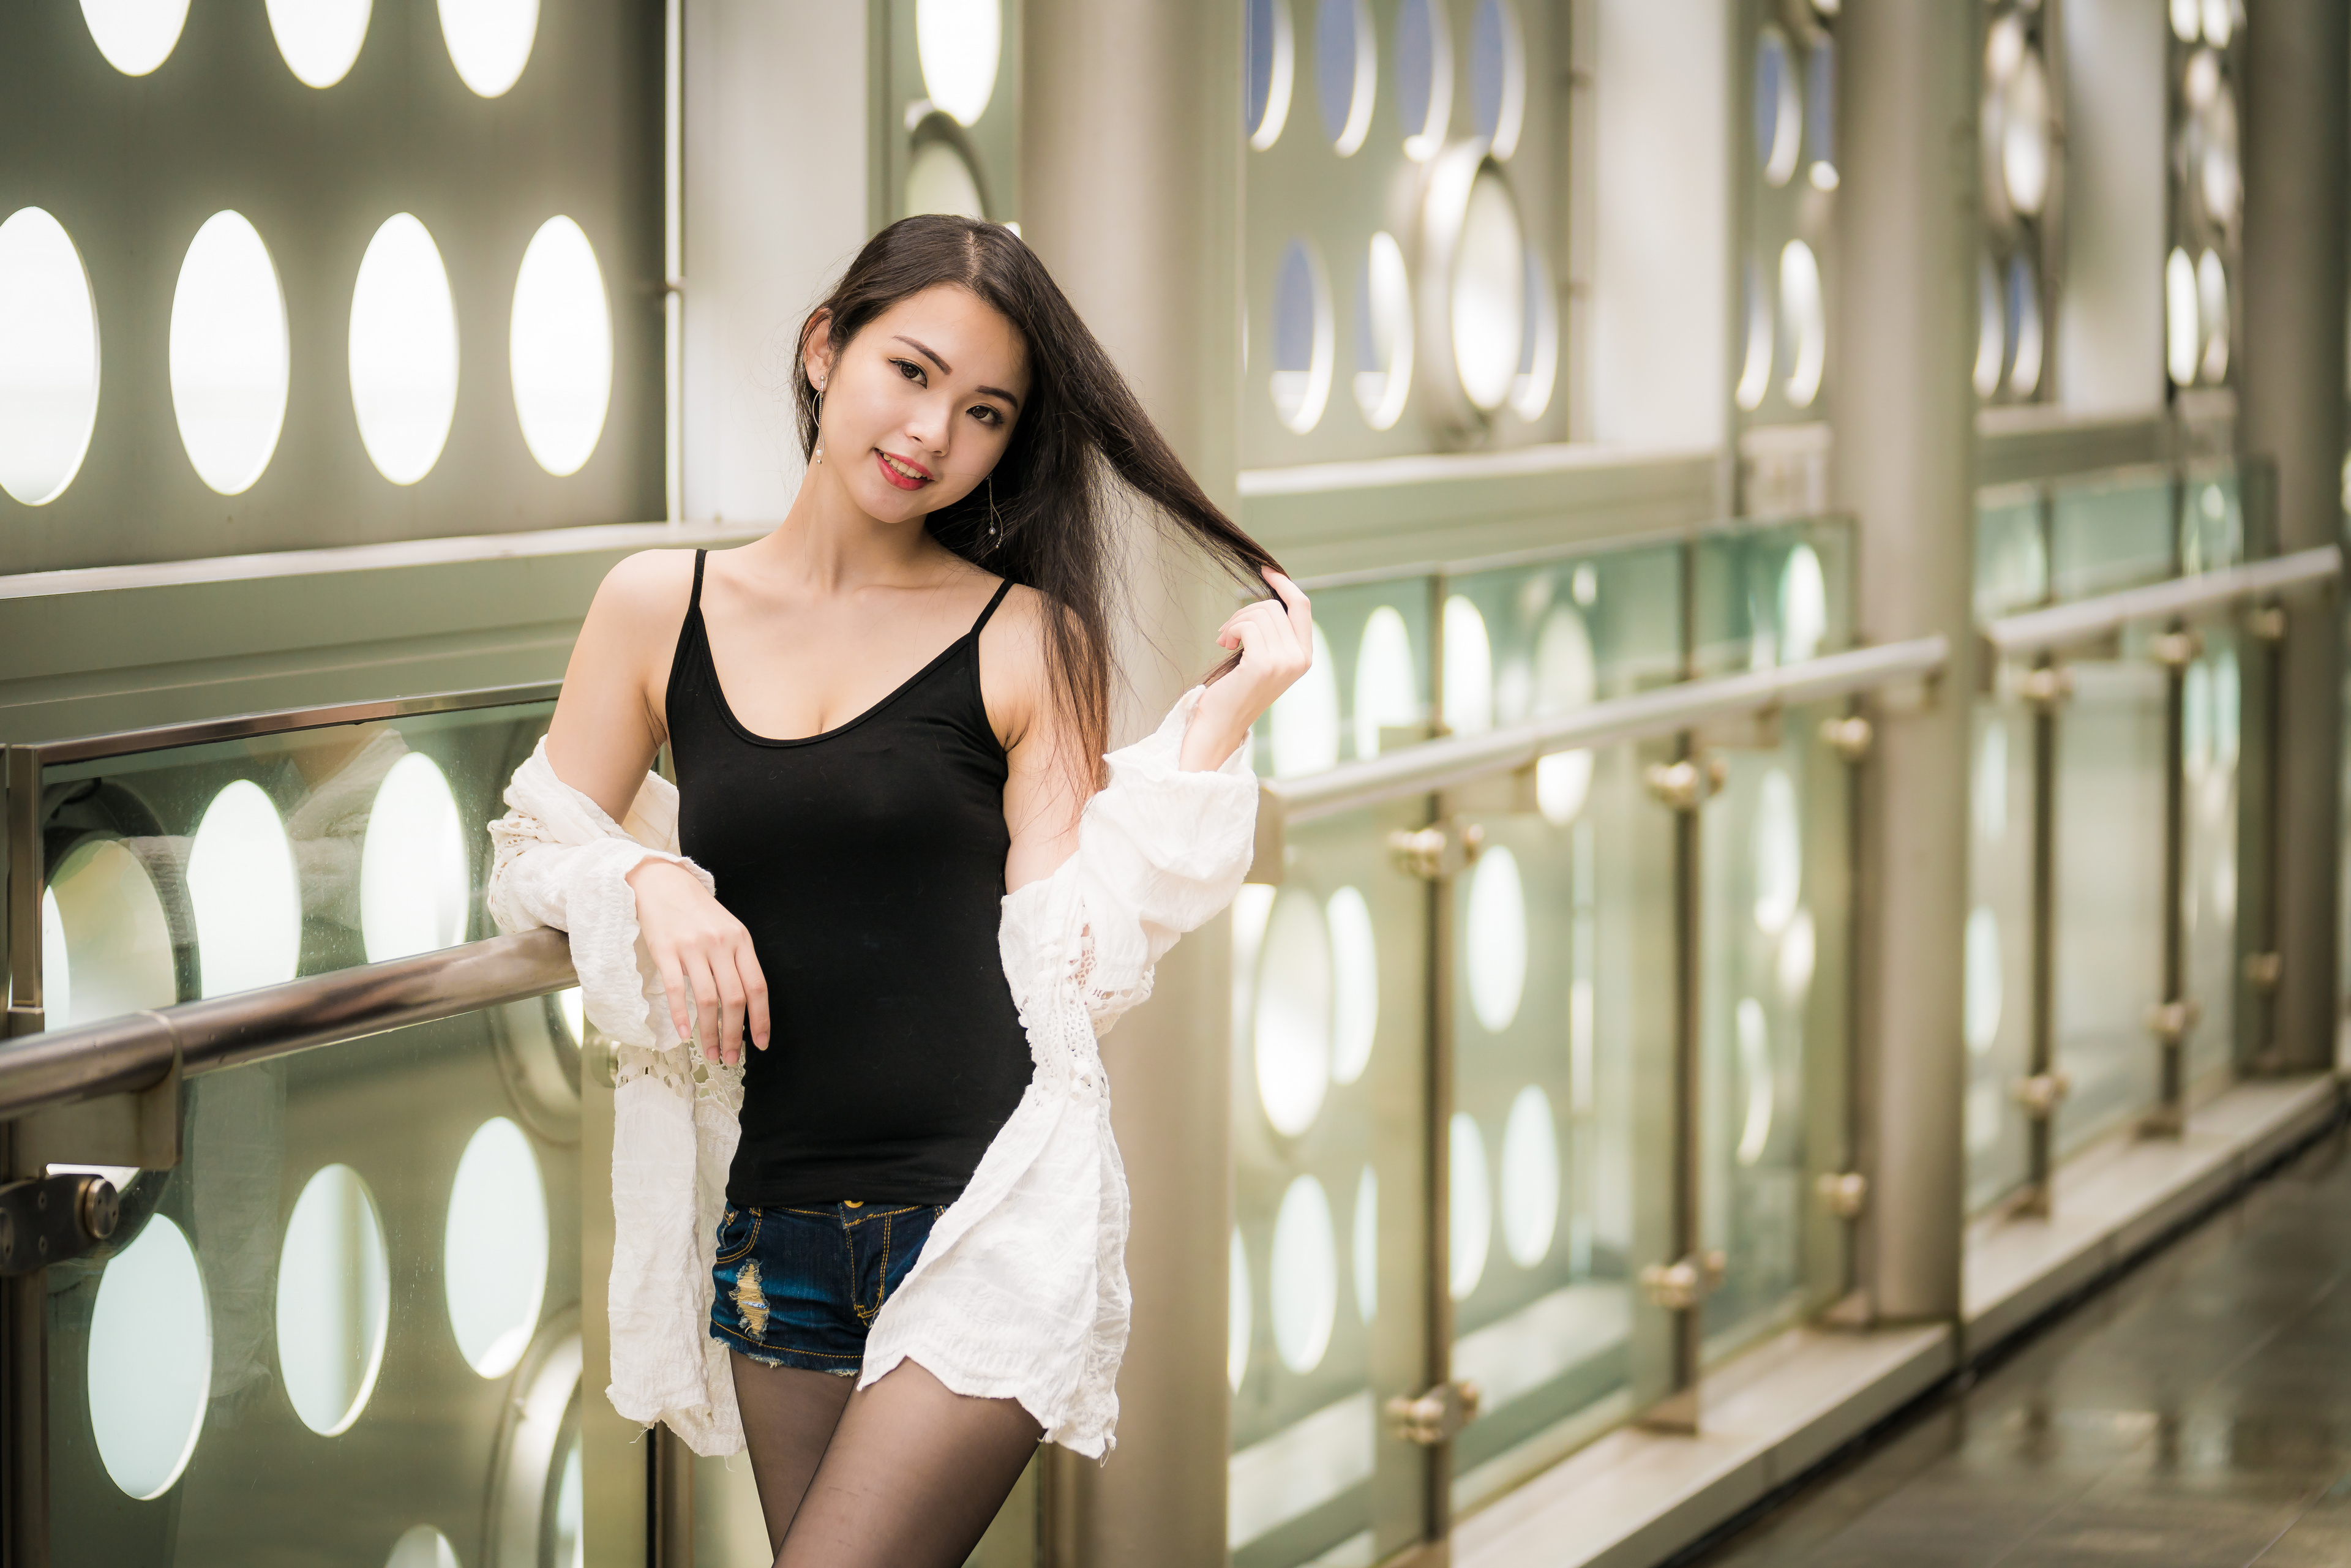 Asian Model Women Long Hair Brunette Black Shirt Shorts Jeans Jacket Nylons Railing Leaning 3840x2561